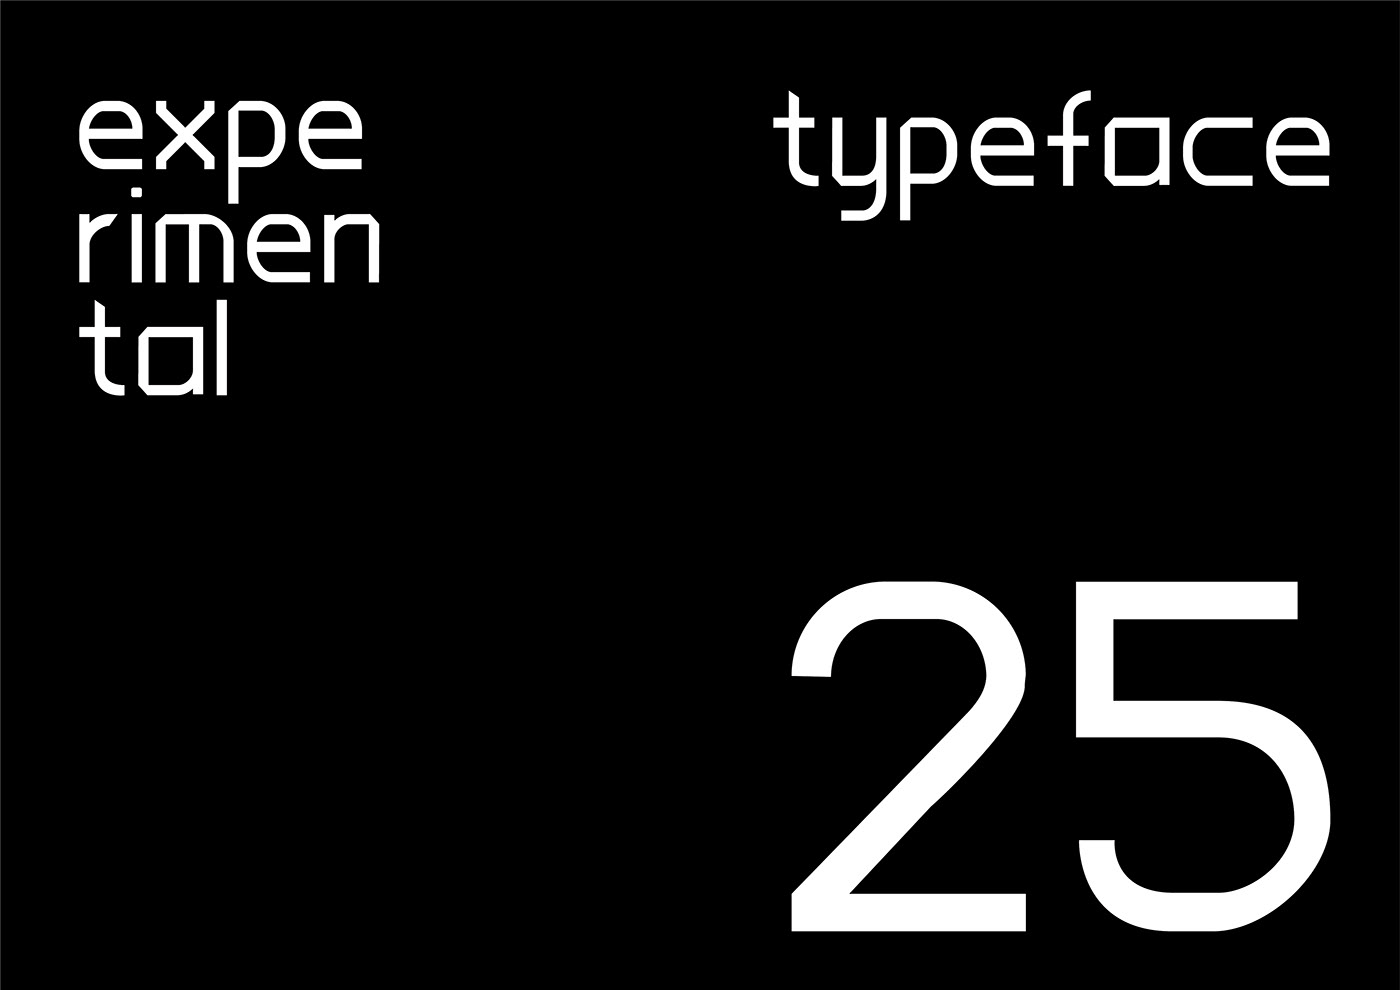 Typeface monospace free download contemporary font type monospaced